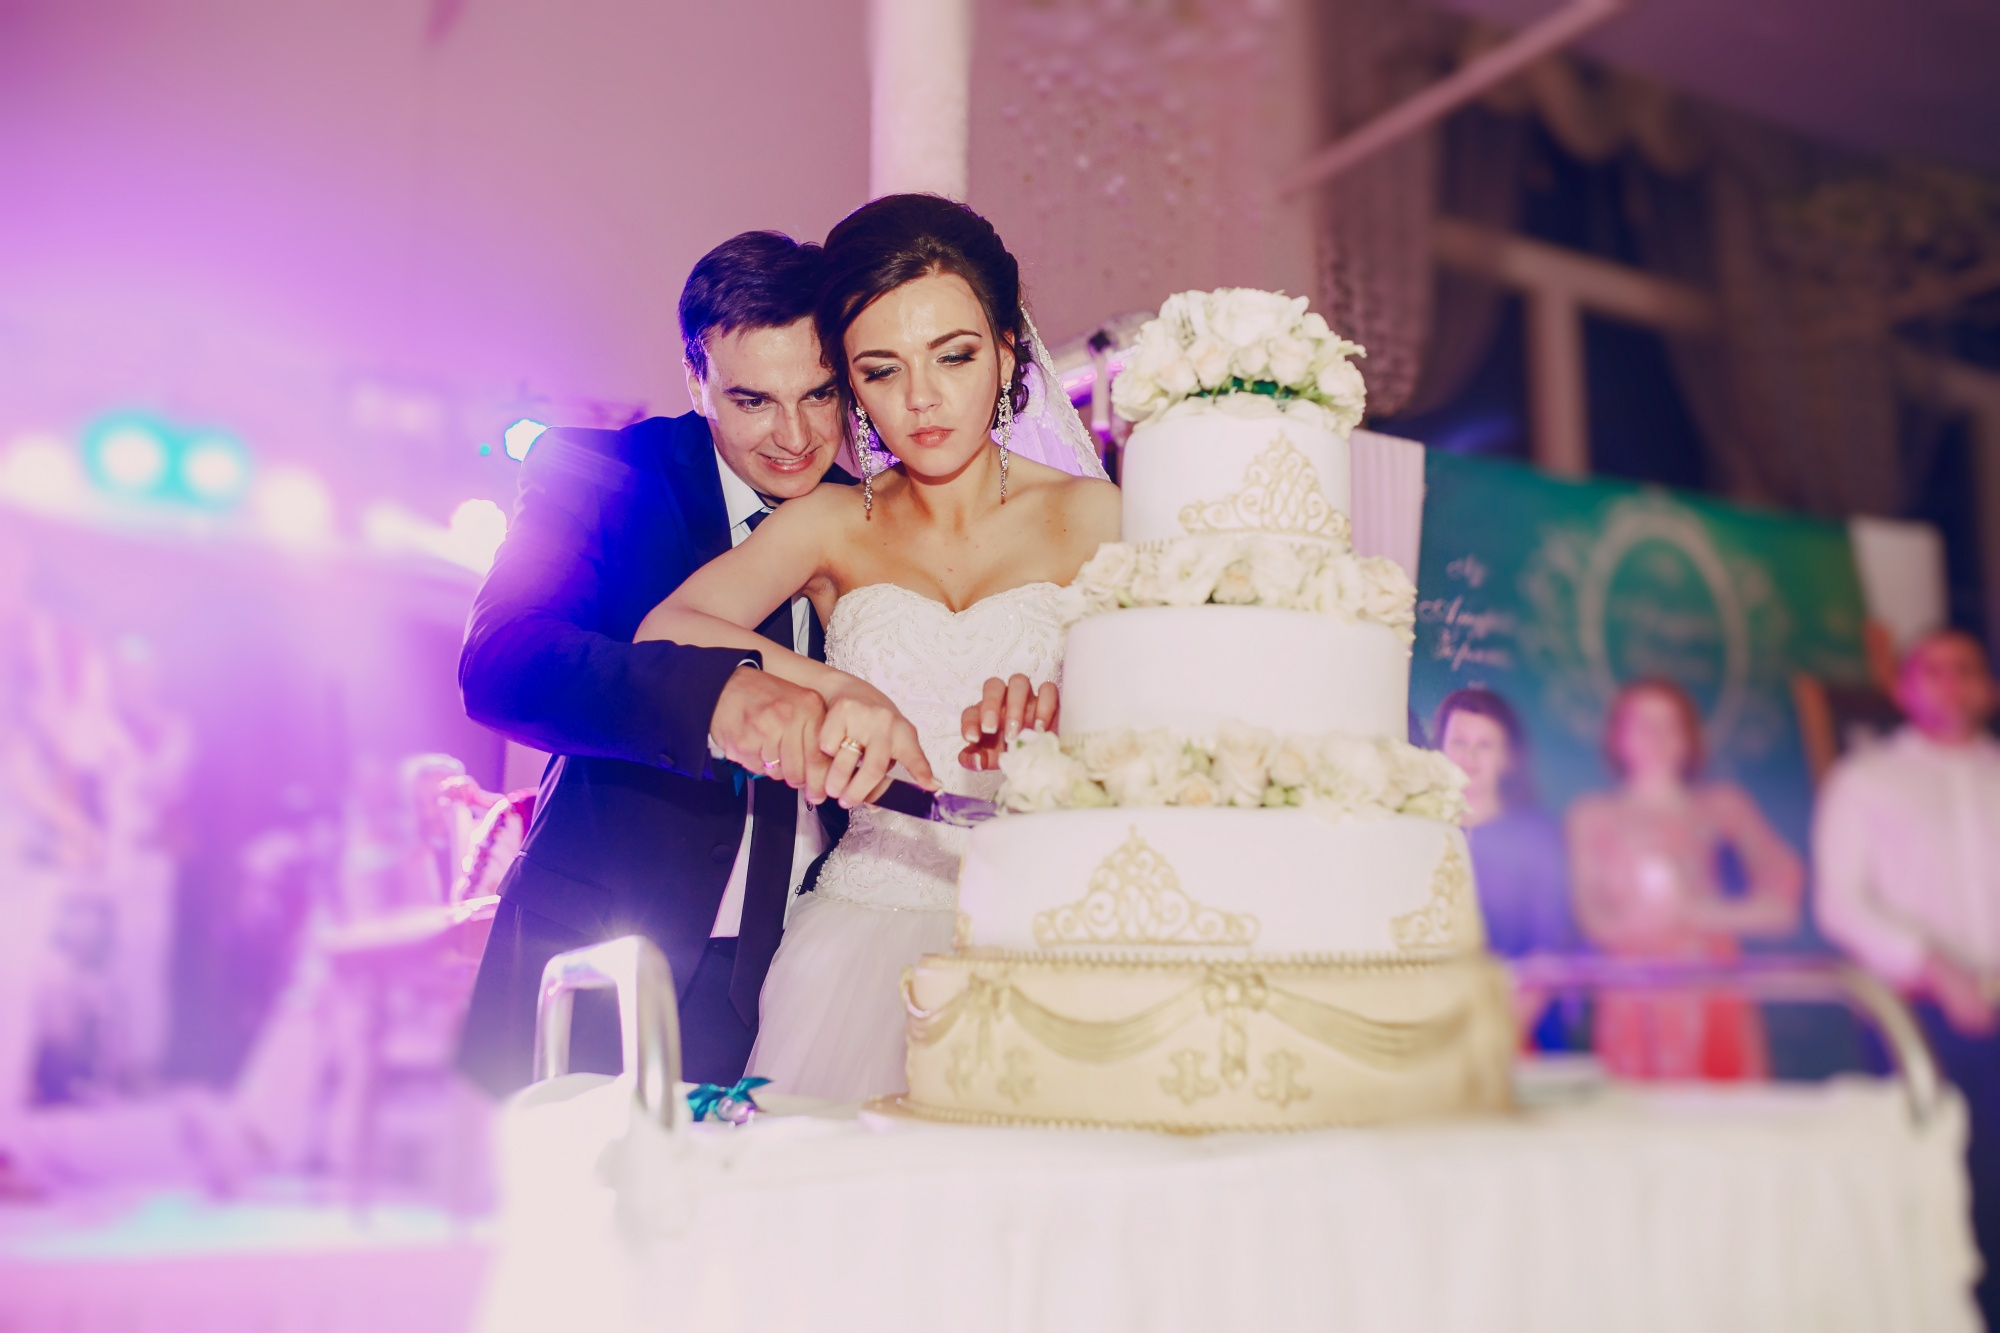 A bride and groom cutting their wedding cake | Source: freepik